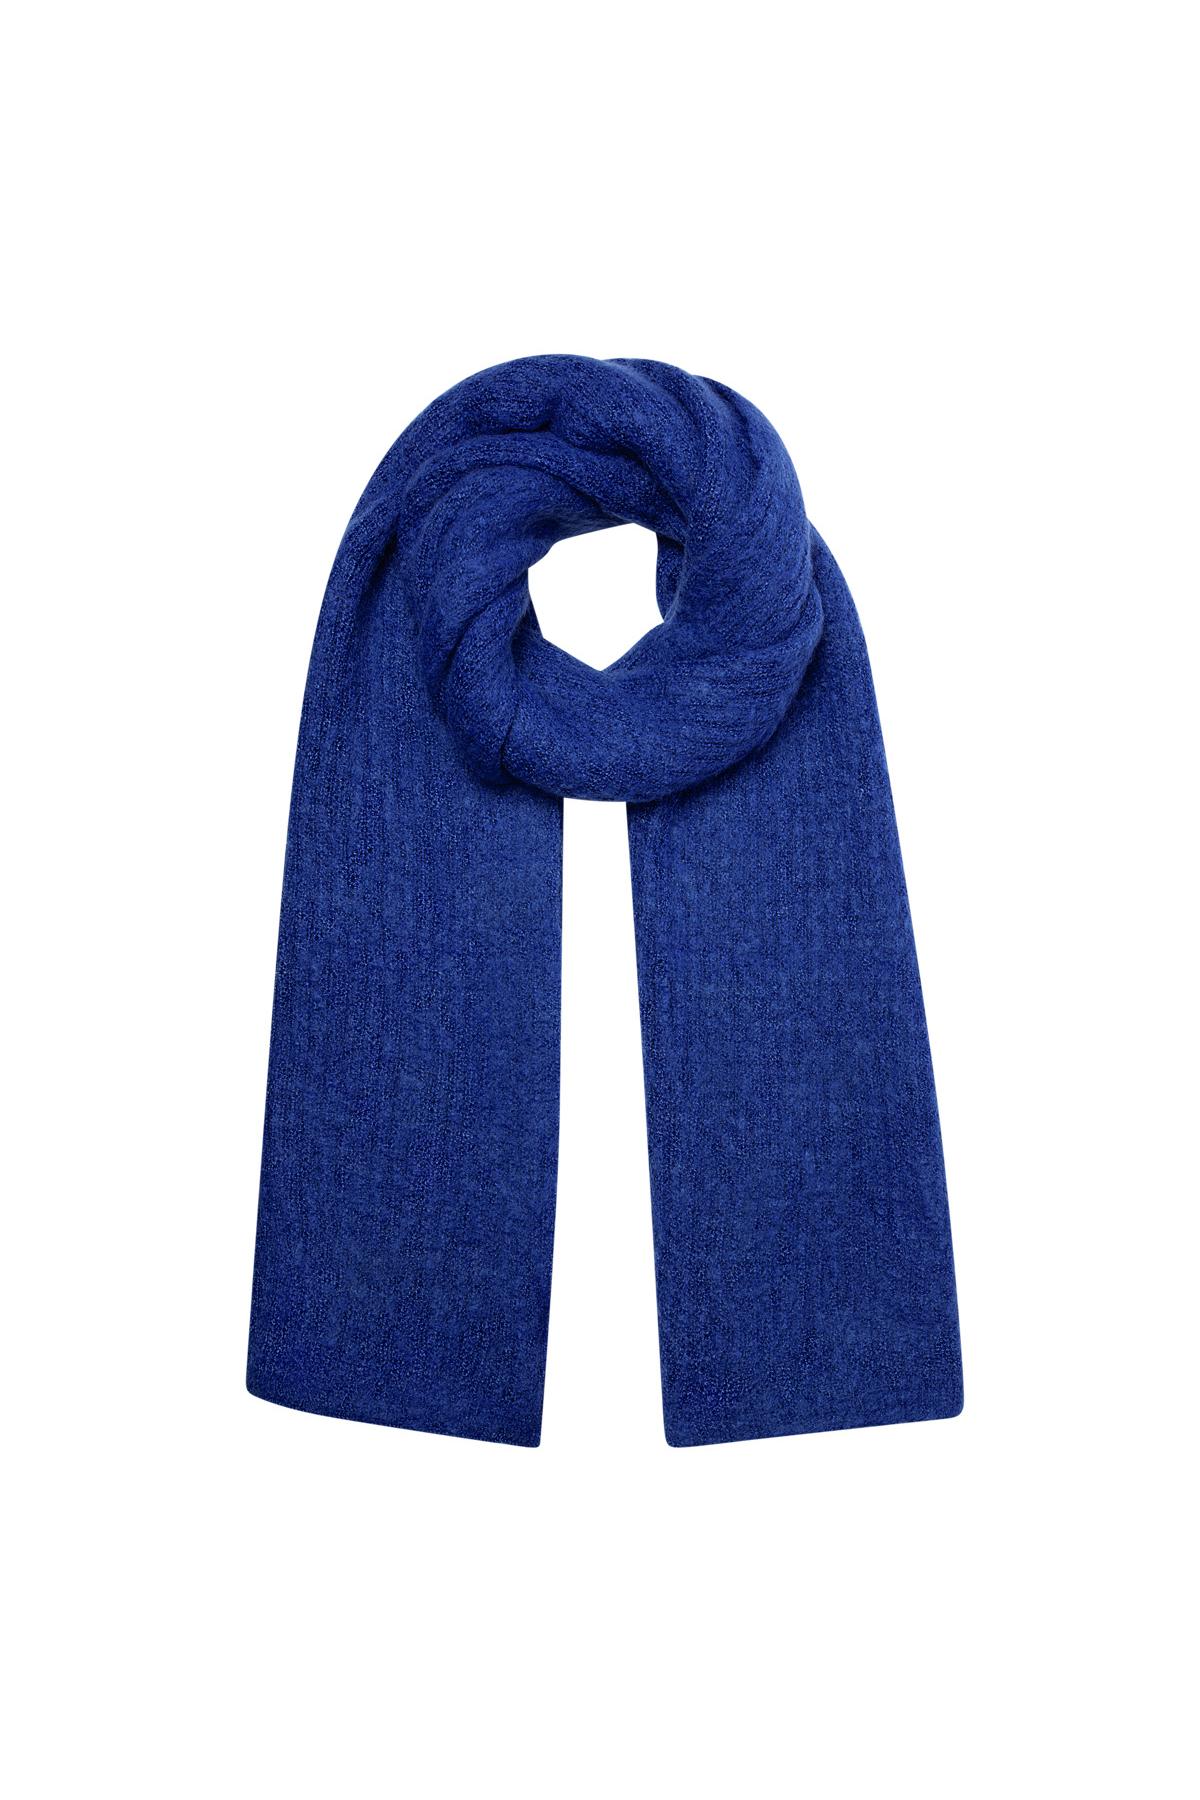 Echarpe tricot uni - bleu h5 